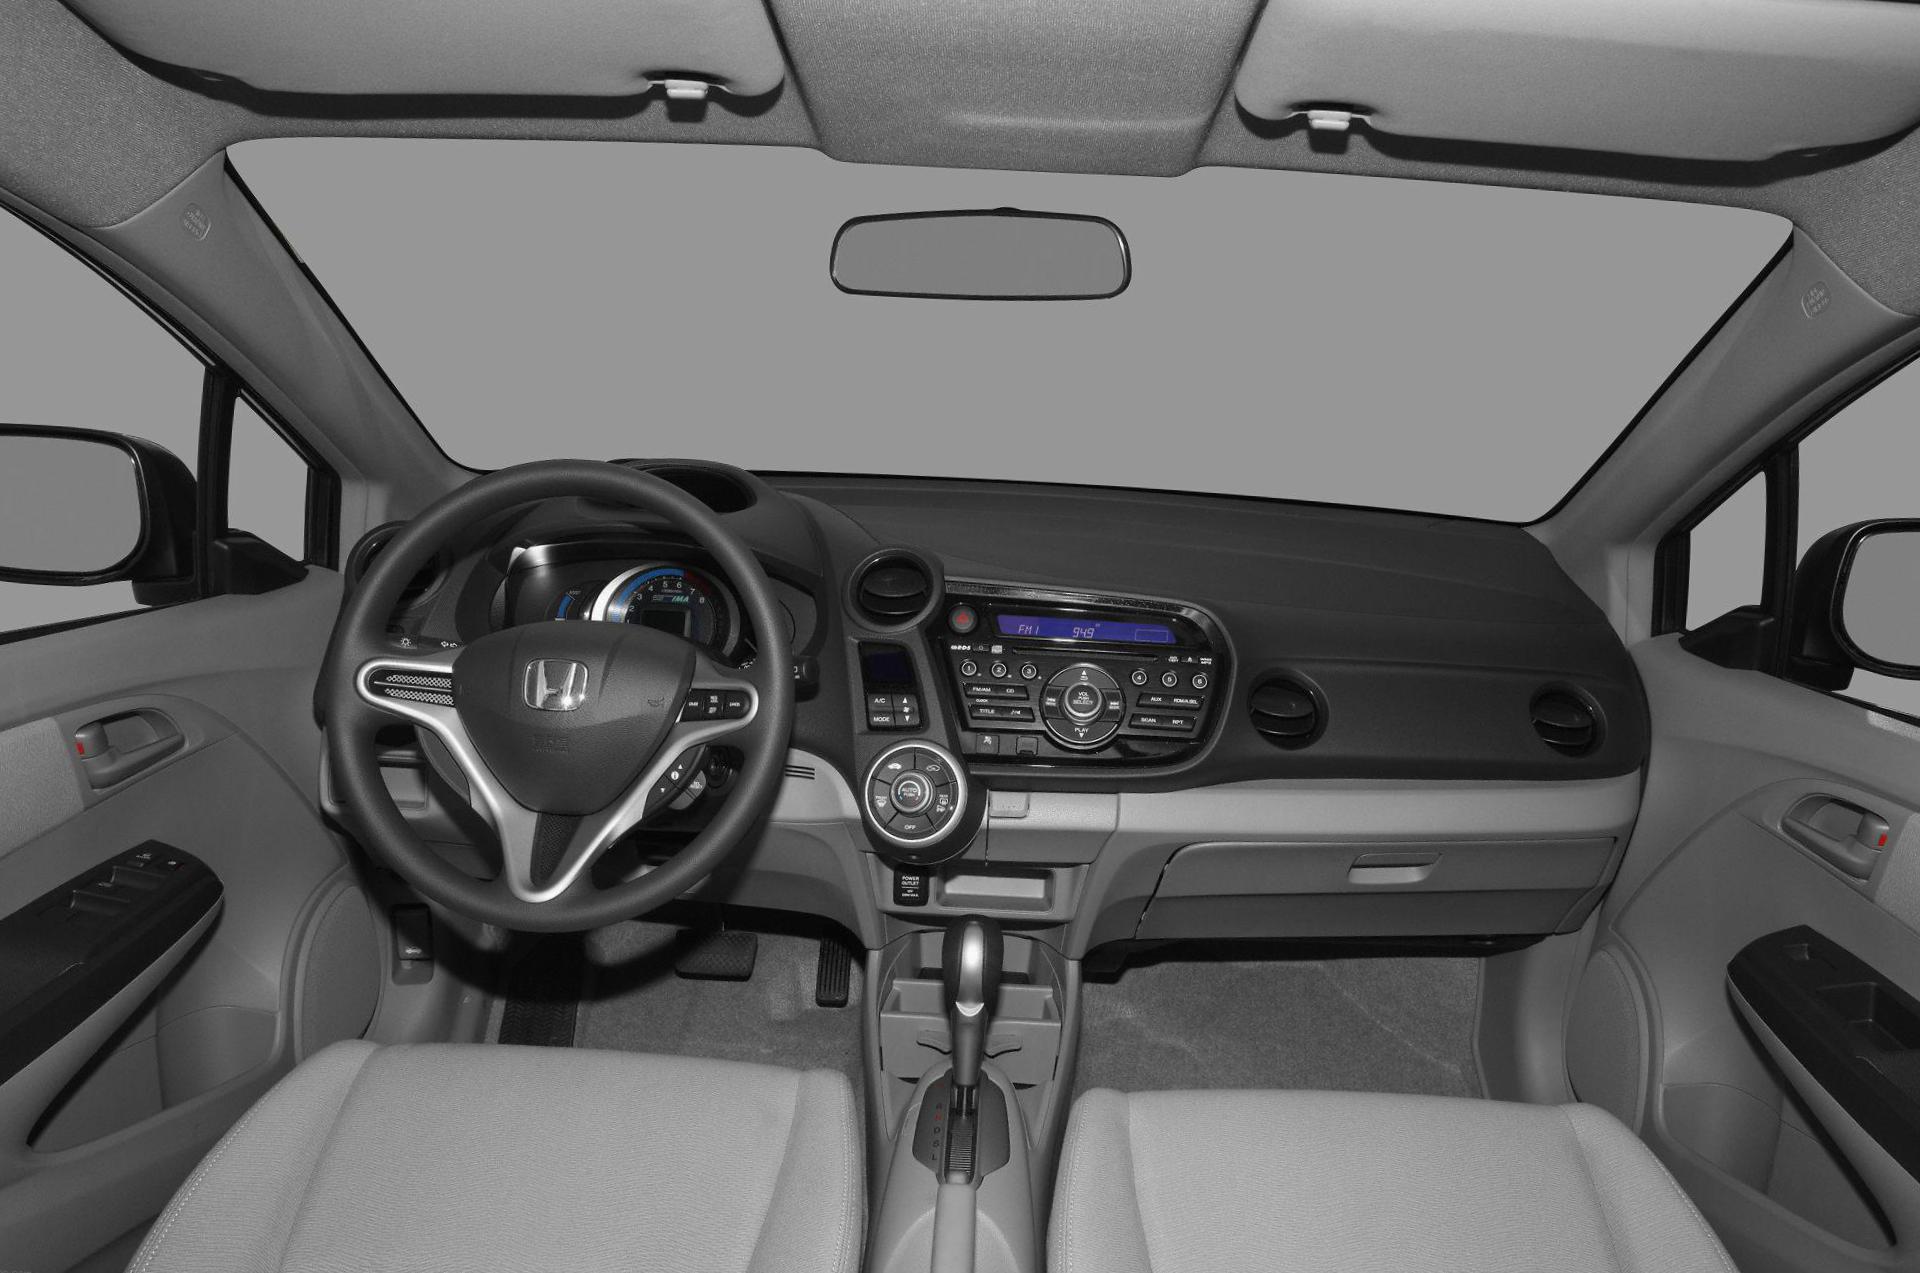 Honda Insight prices 2010